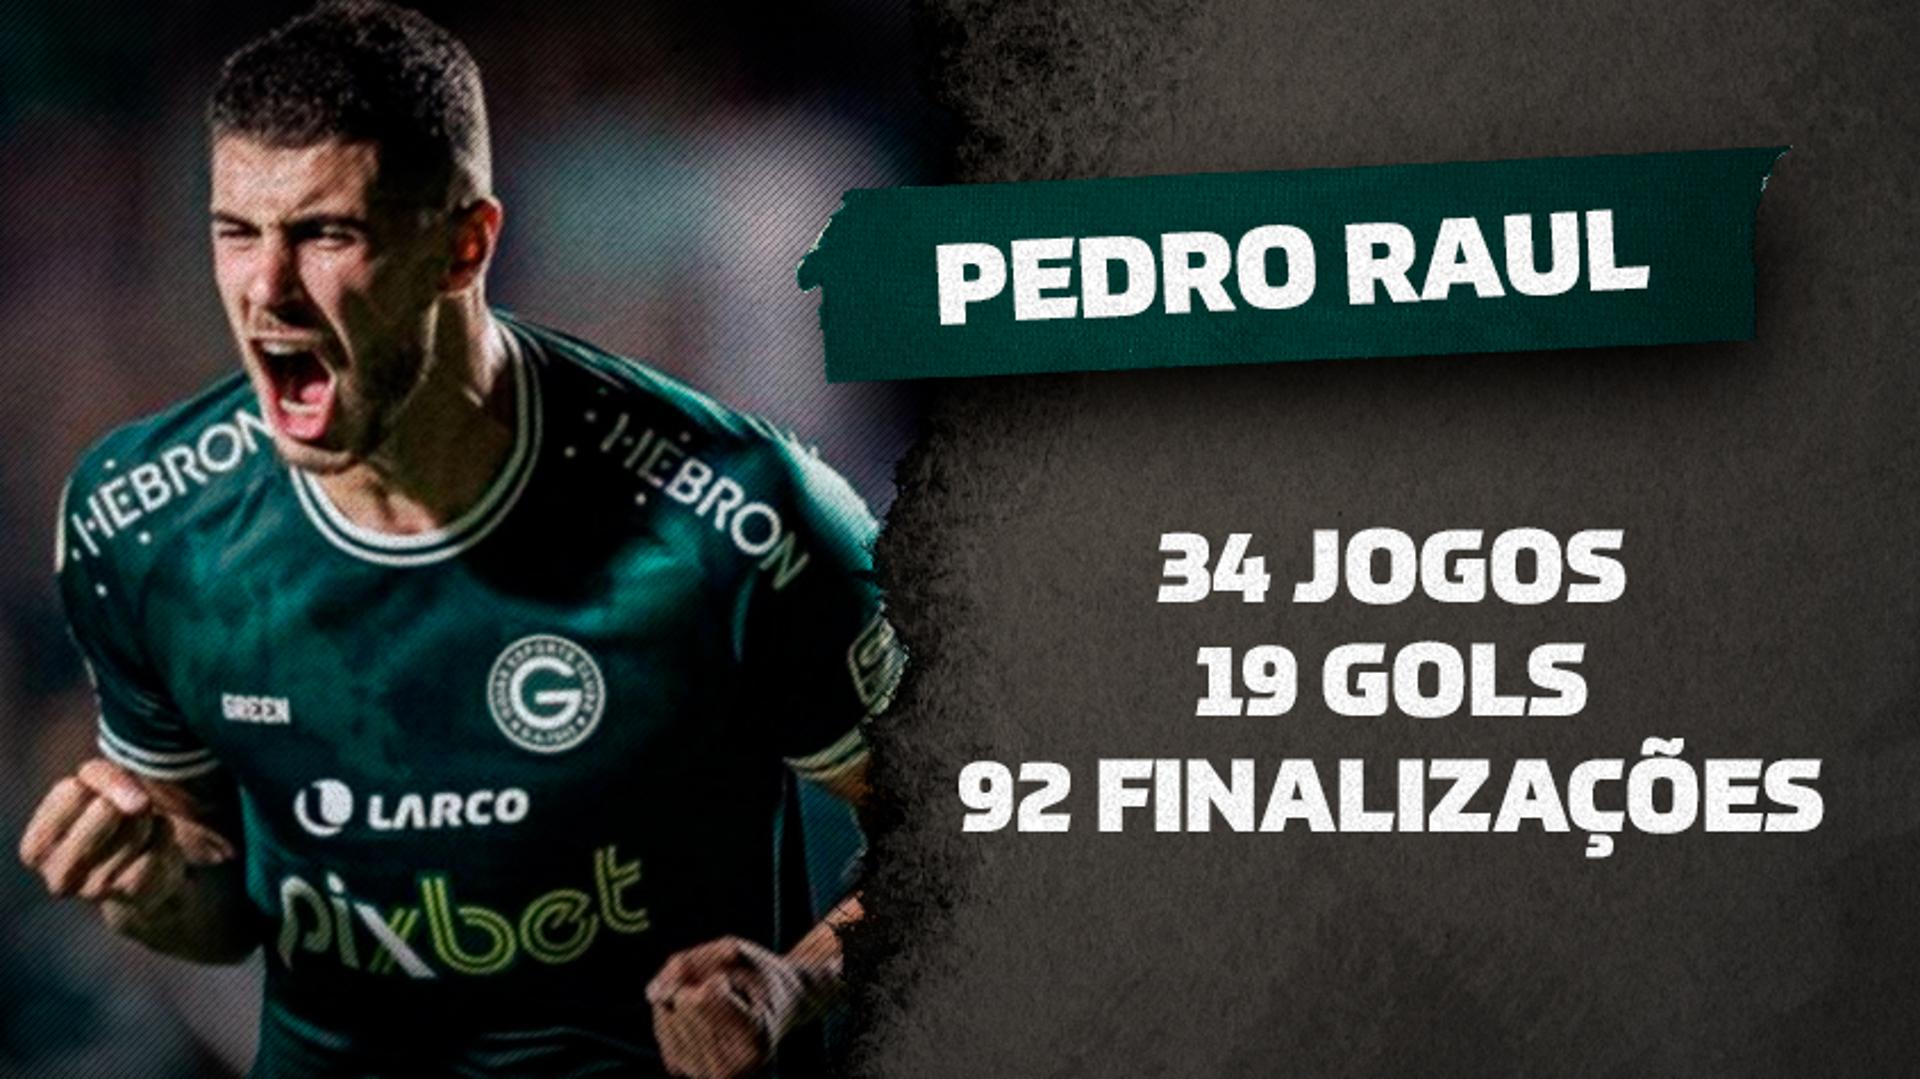 Pedro Raul